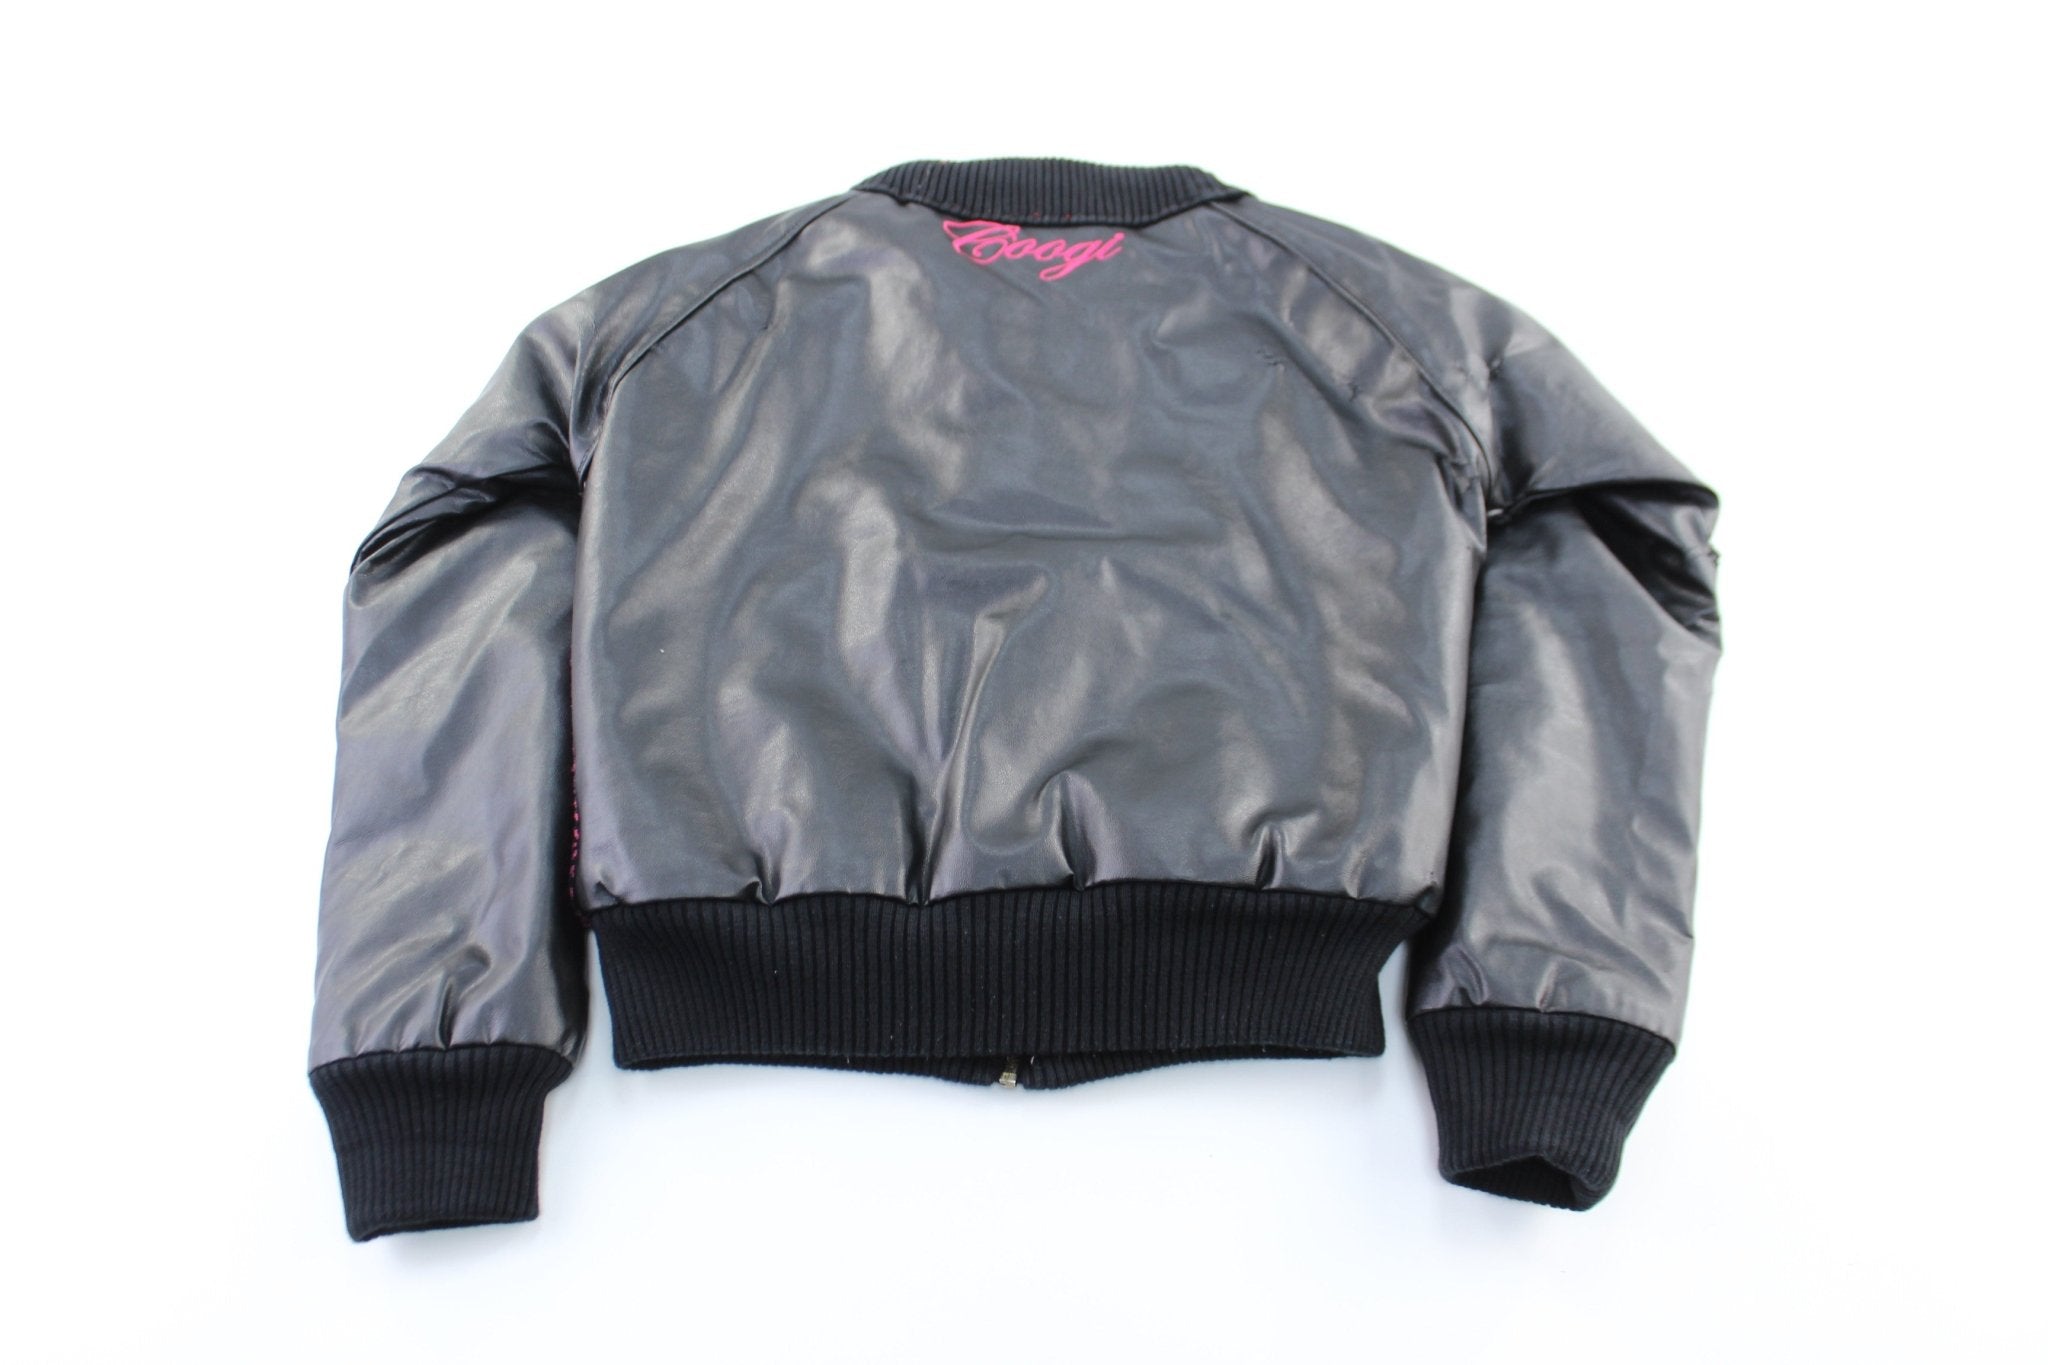 Women's Coogi Black Leather Zip Up Jacket - ThriftedThreads.com